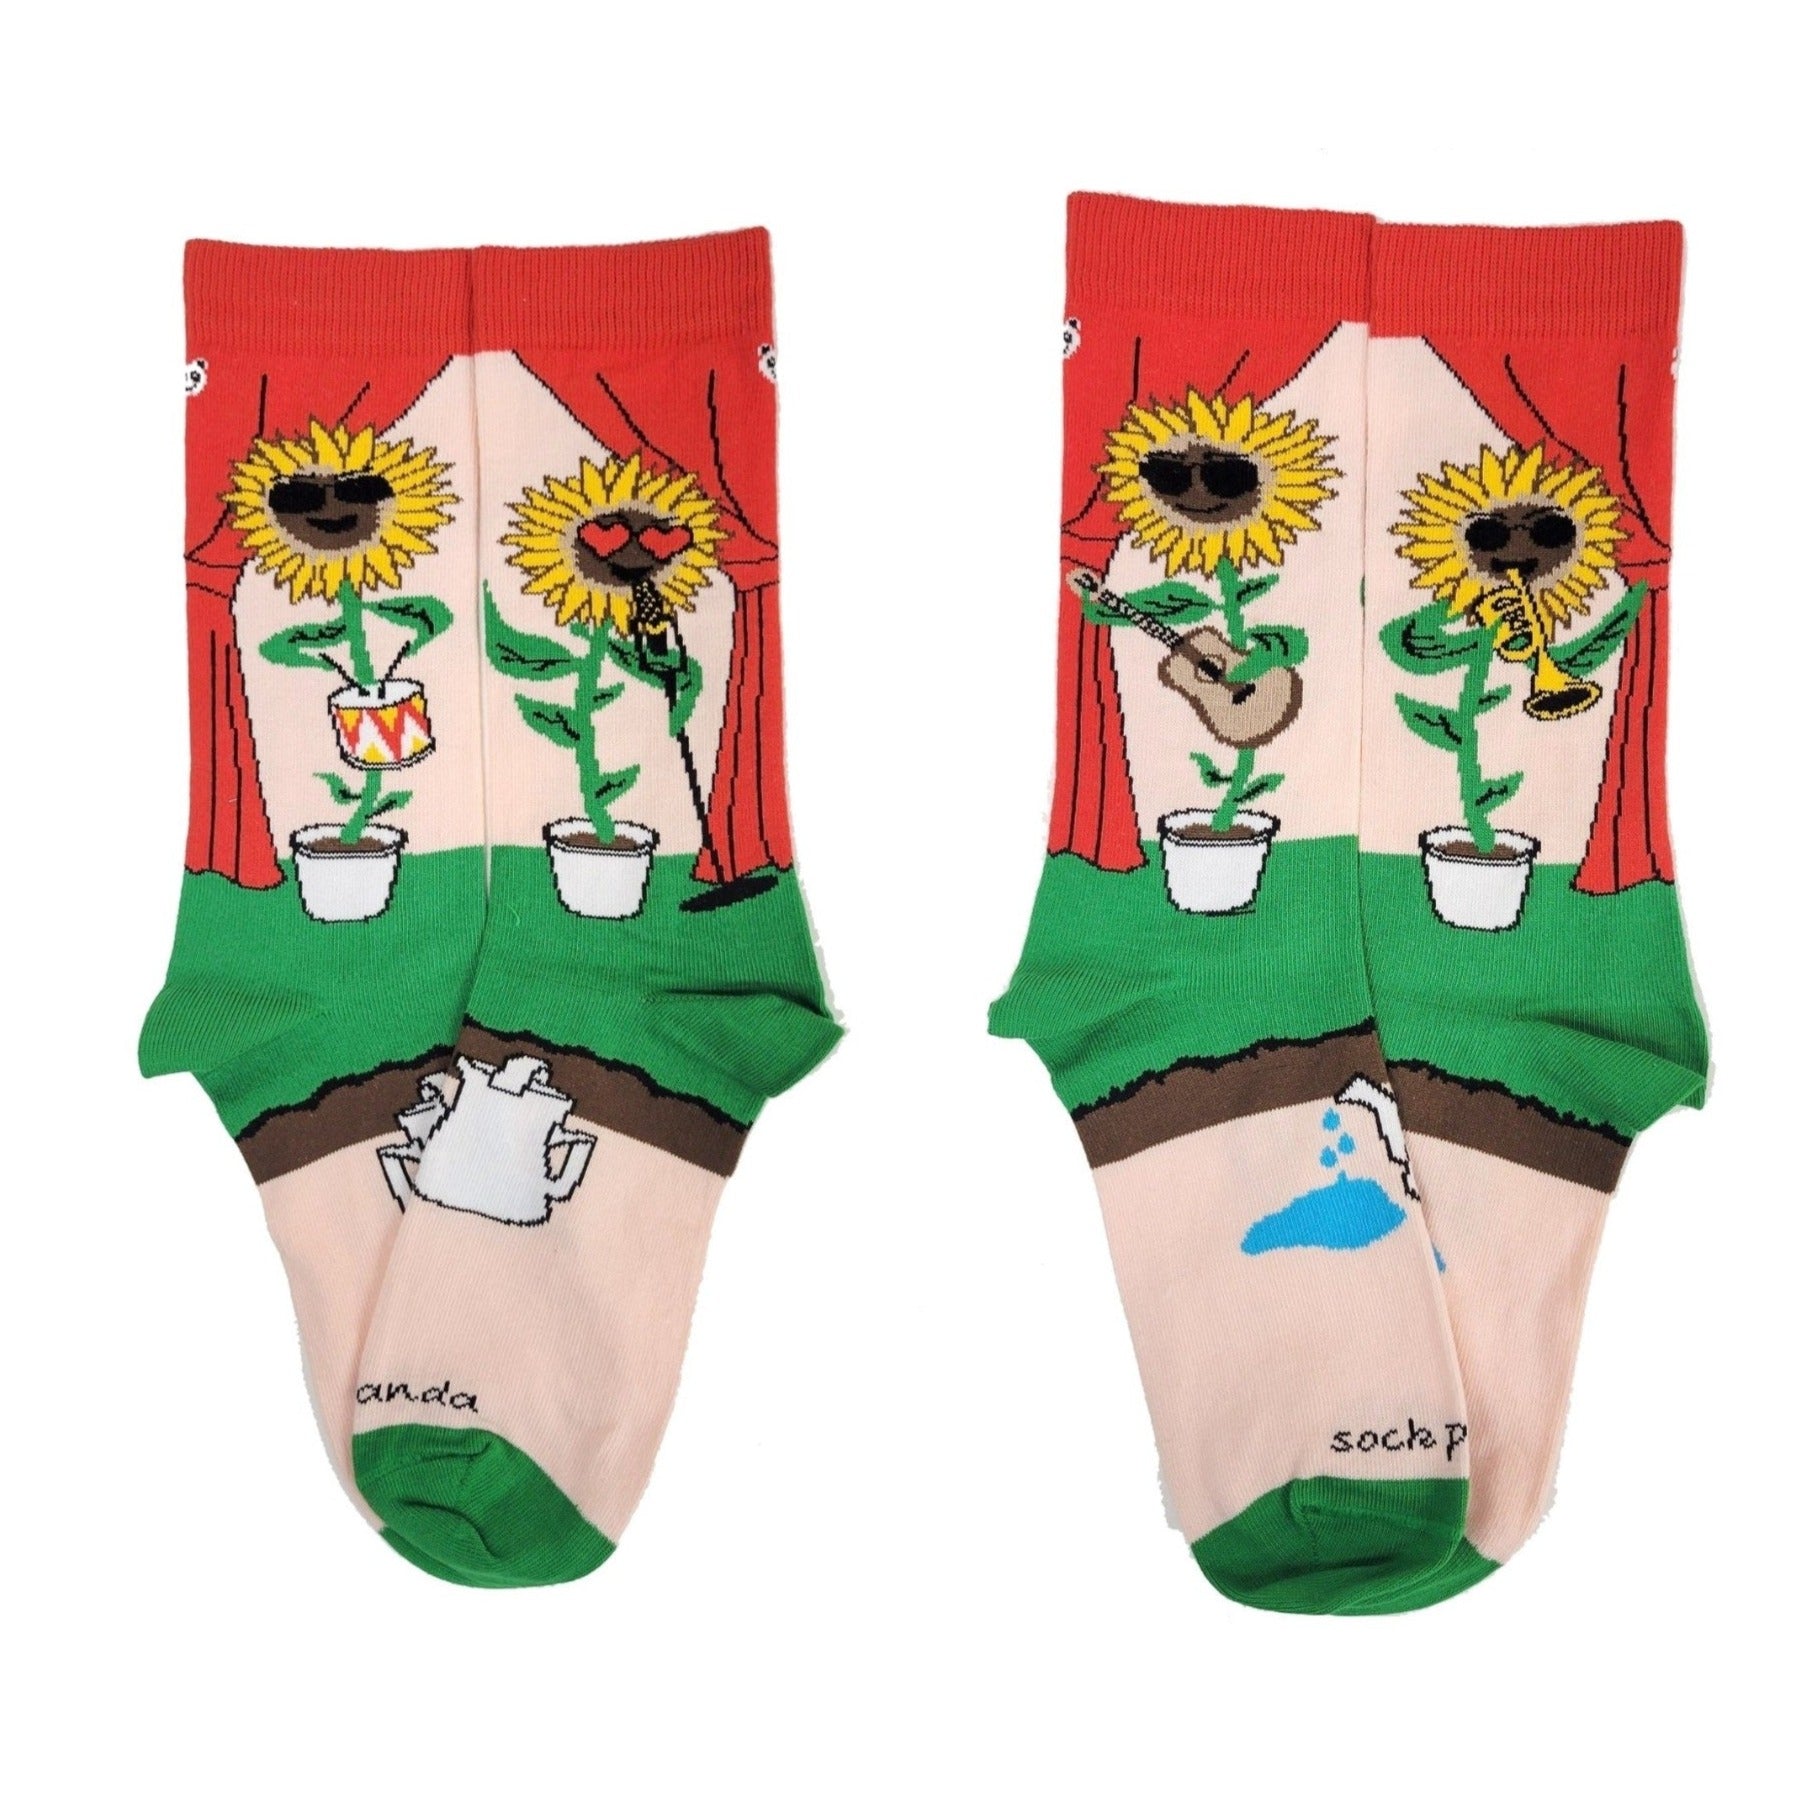 Rock'n Sunflower Band Socks from the Sock Panda